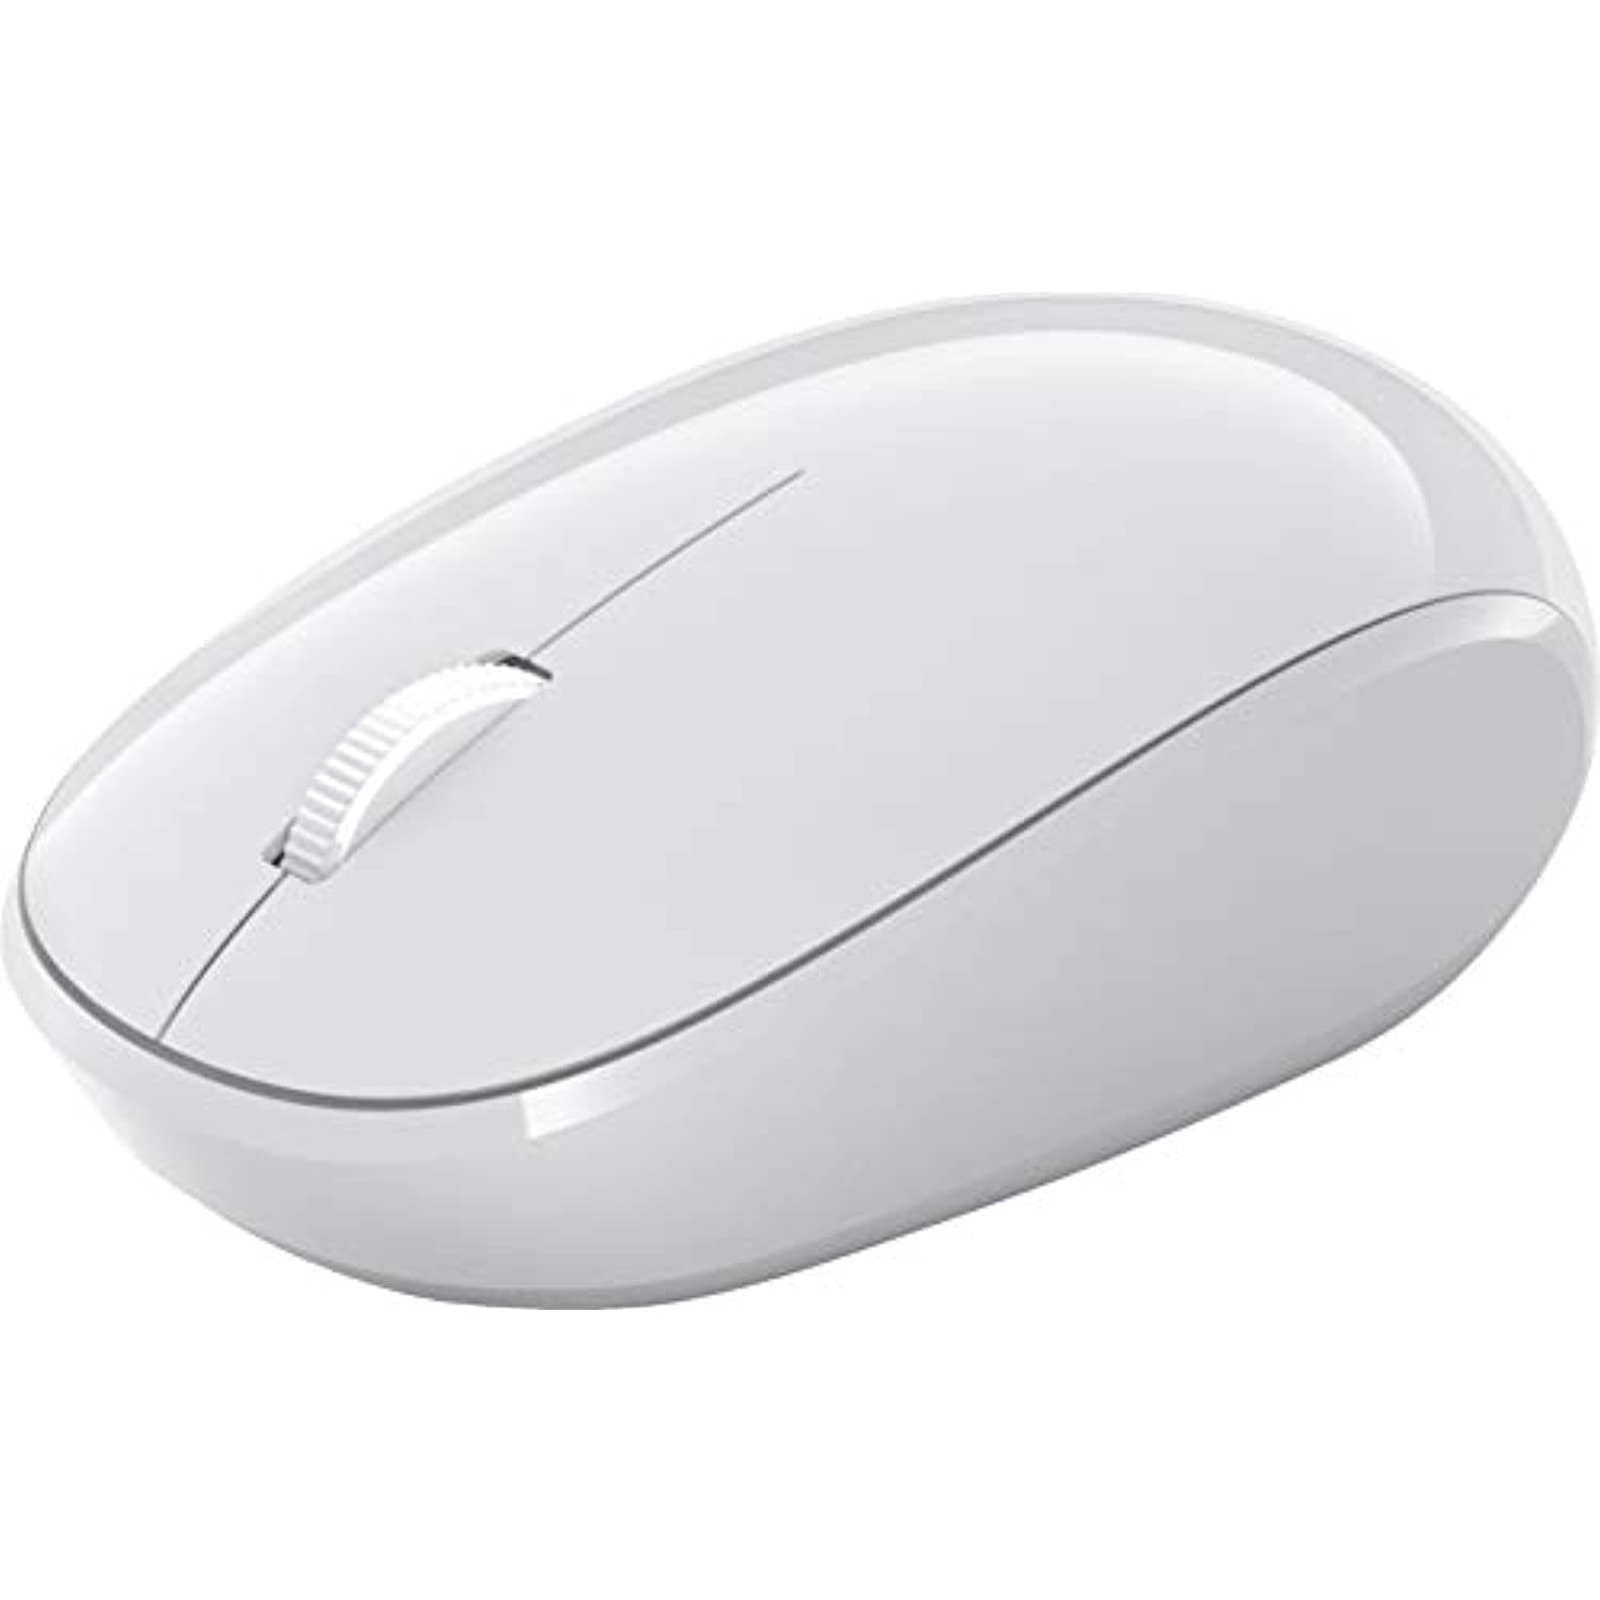 Microsoft - QHG-00031 Bluetooth Keyboard and Mouse Bundle - Glacier